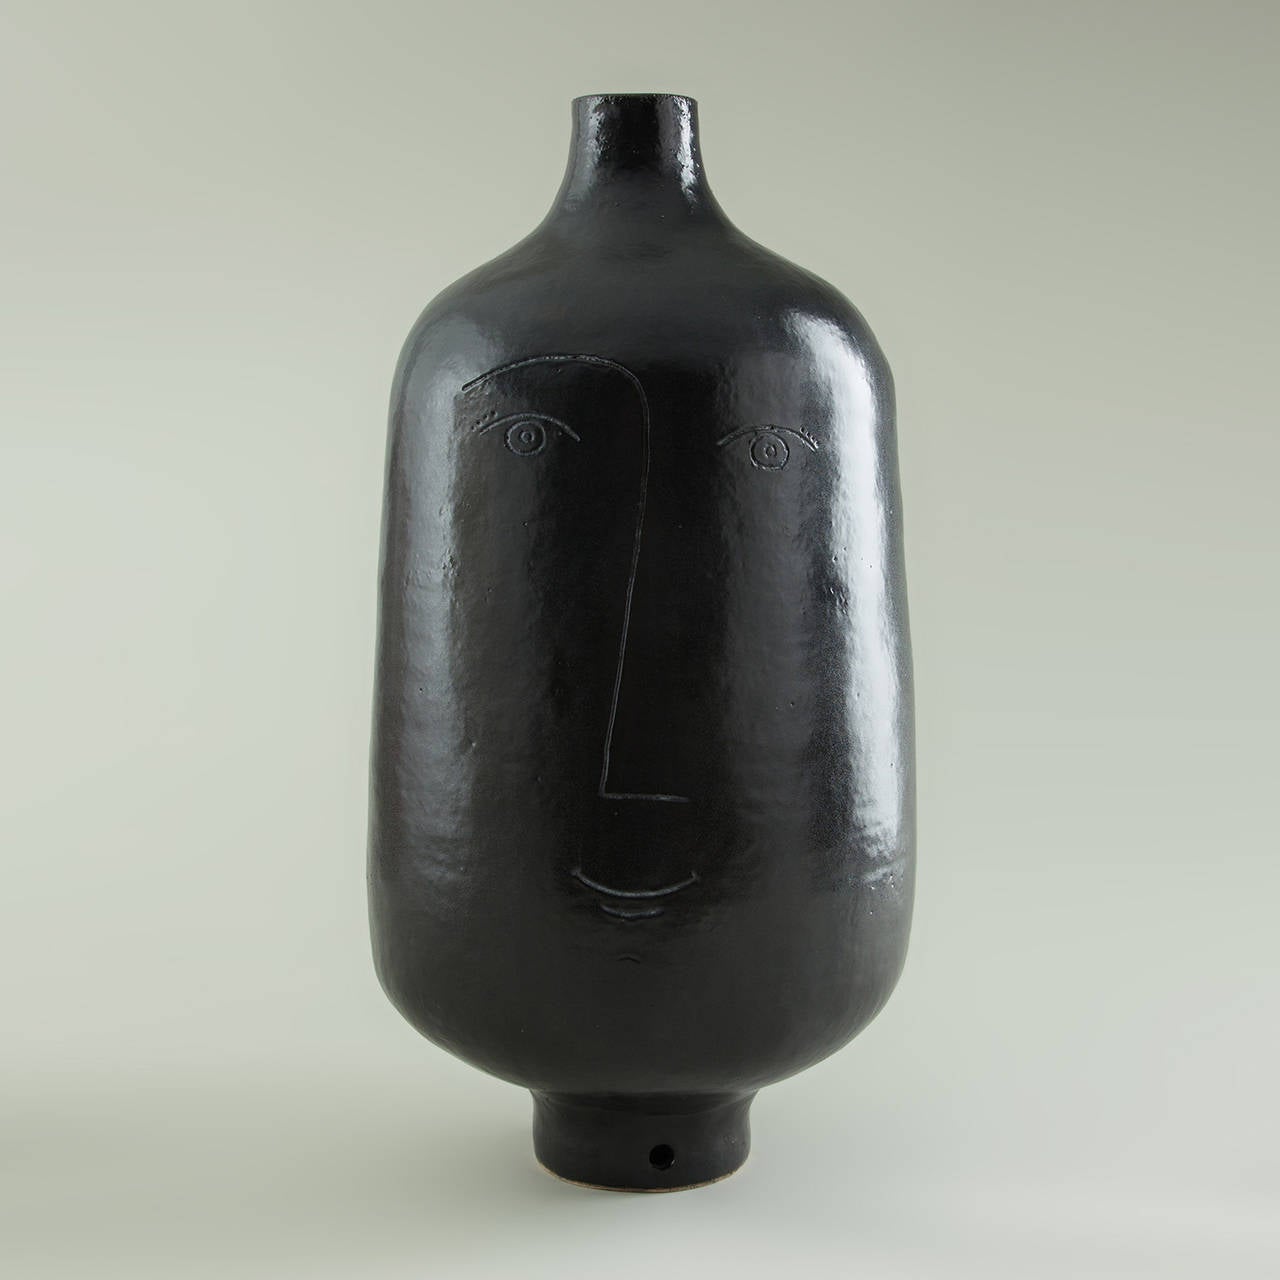 Black Enameled Stoneware Lamp by Dalo, 2014. Unique piece.

Dimensions: H 64 cm - Ø 35 cm

Dalo is a ceramic work­shop that reunites Paris ceramists Daniel and Loïc under a com­mon con­cept and know-how. Instantly rec­og­niz­able in their